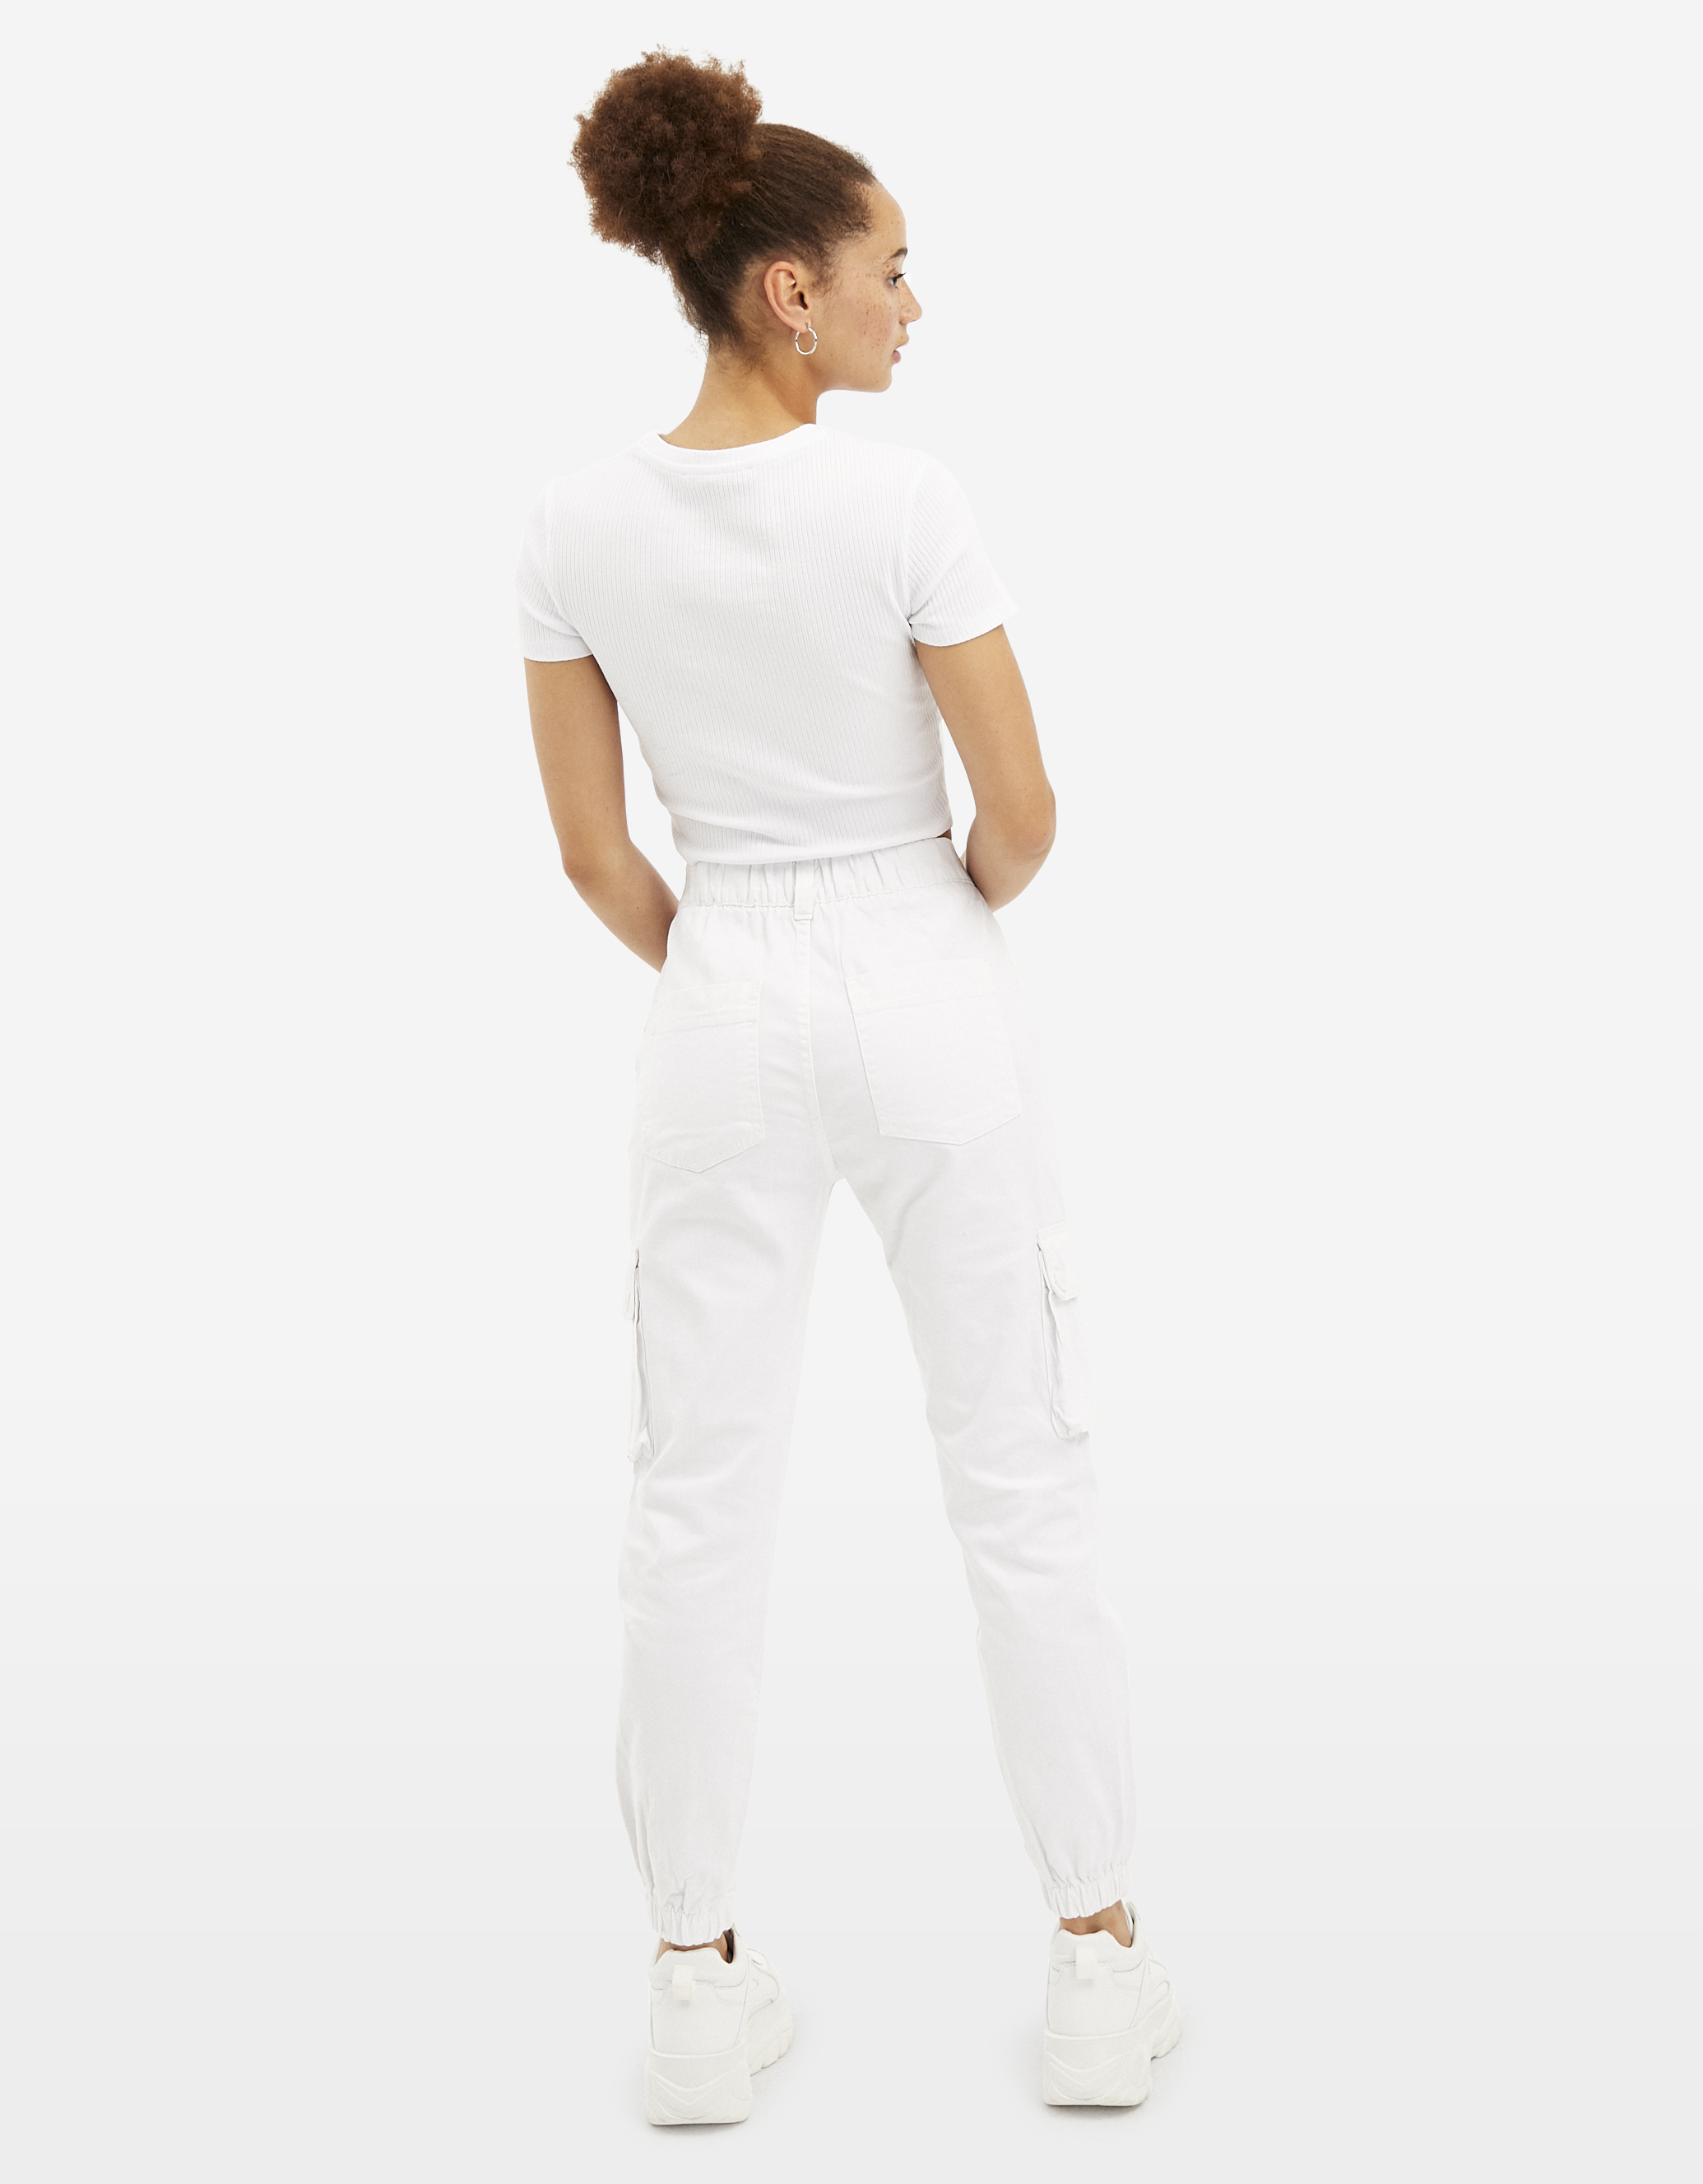 Pantalon Cargo Blanc